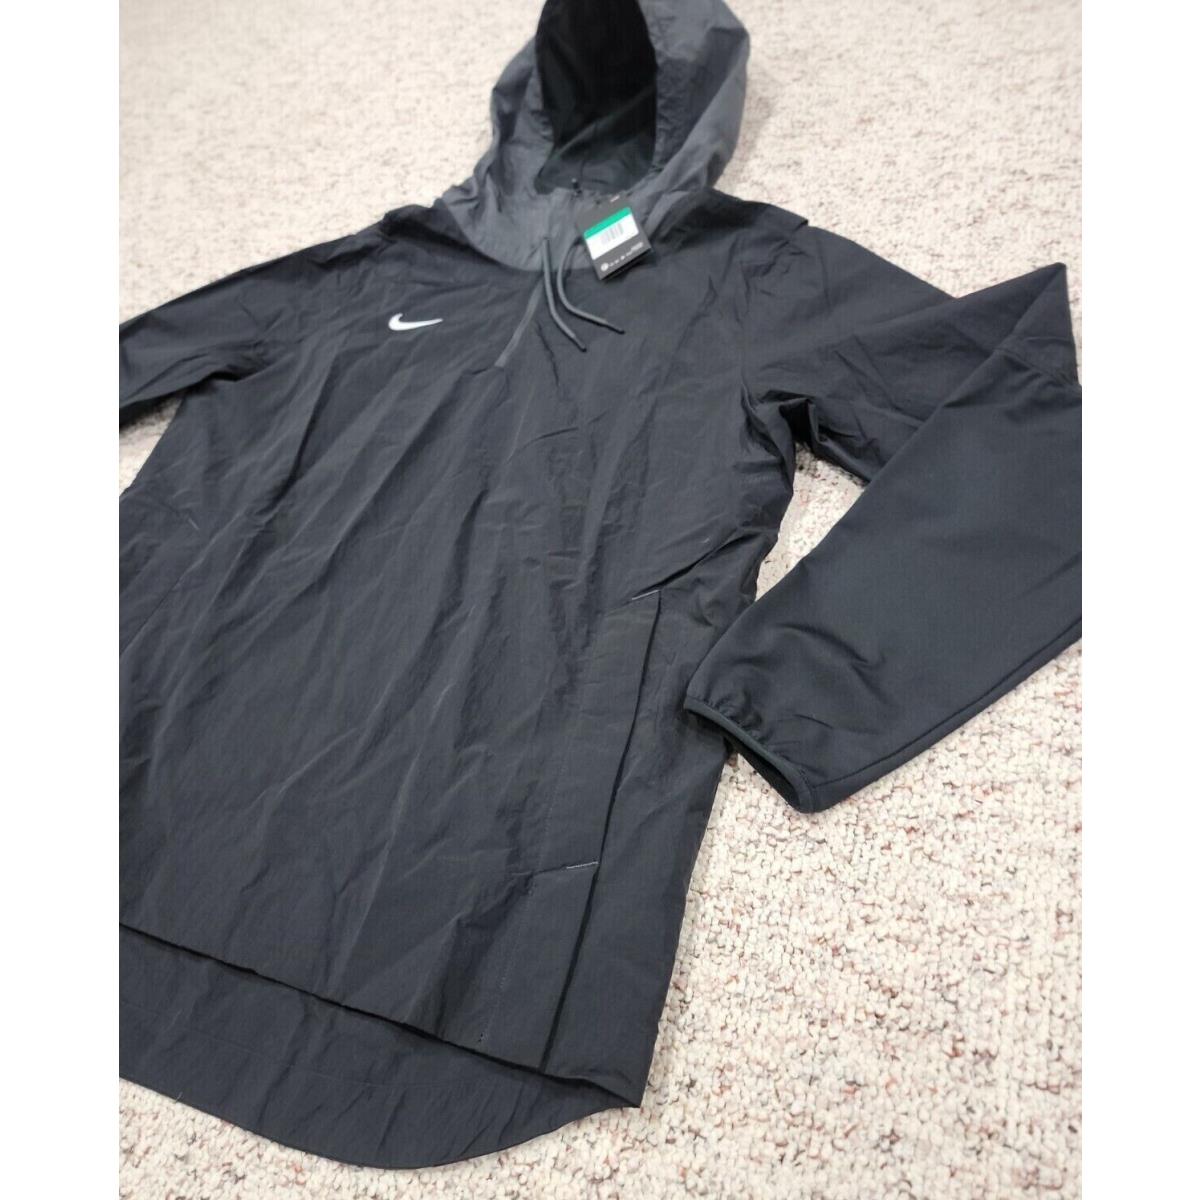 Nike clothing Football - Black 2